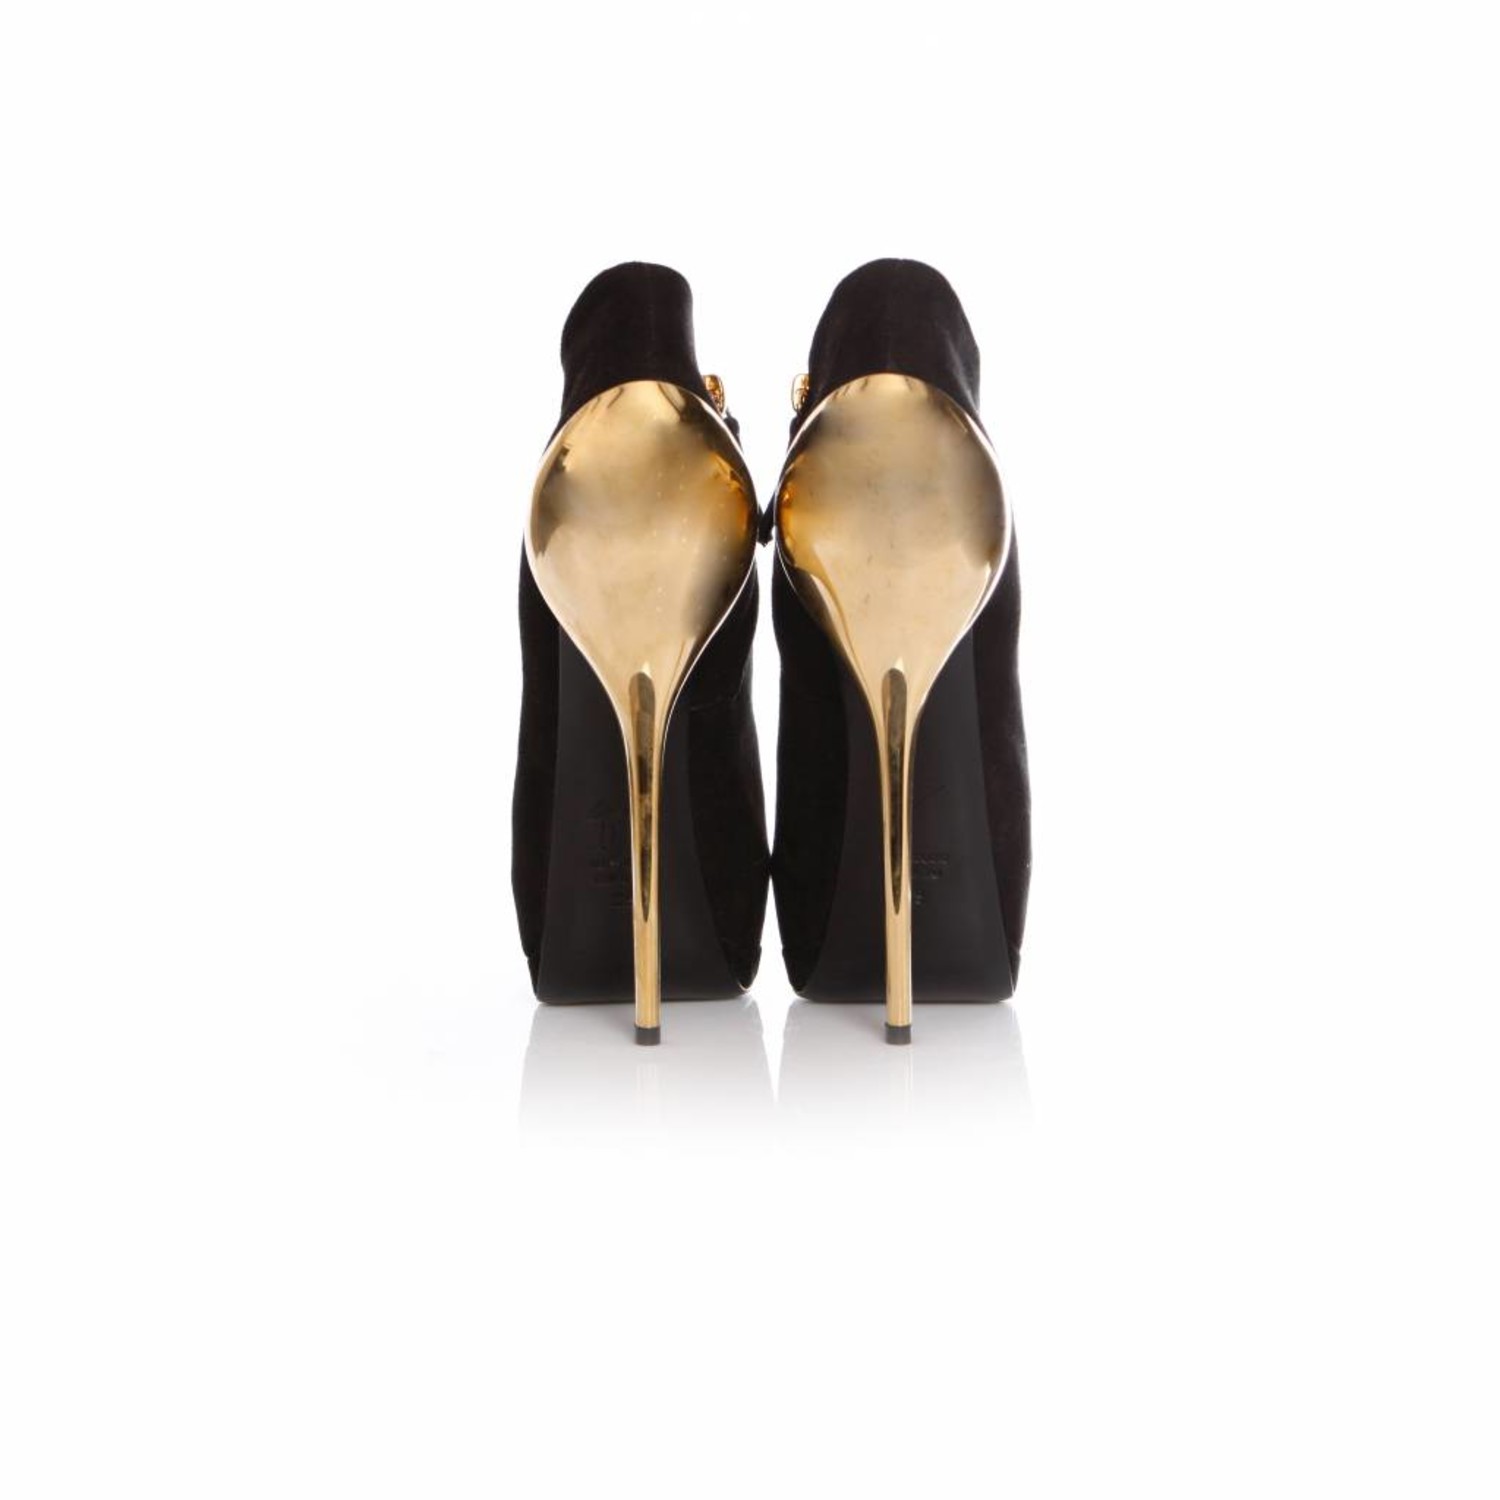 Zanotti Giuseppe Zanotti, black suede peep toe platform shoots with golden heel in size 39. - Unique Designer Pieces